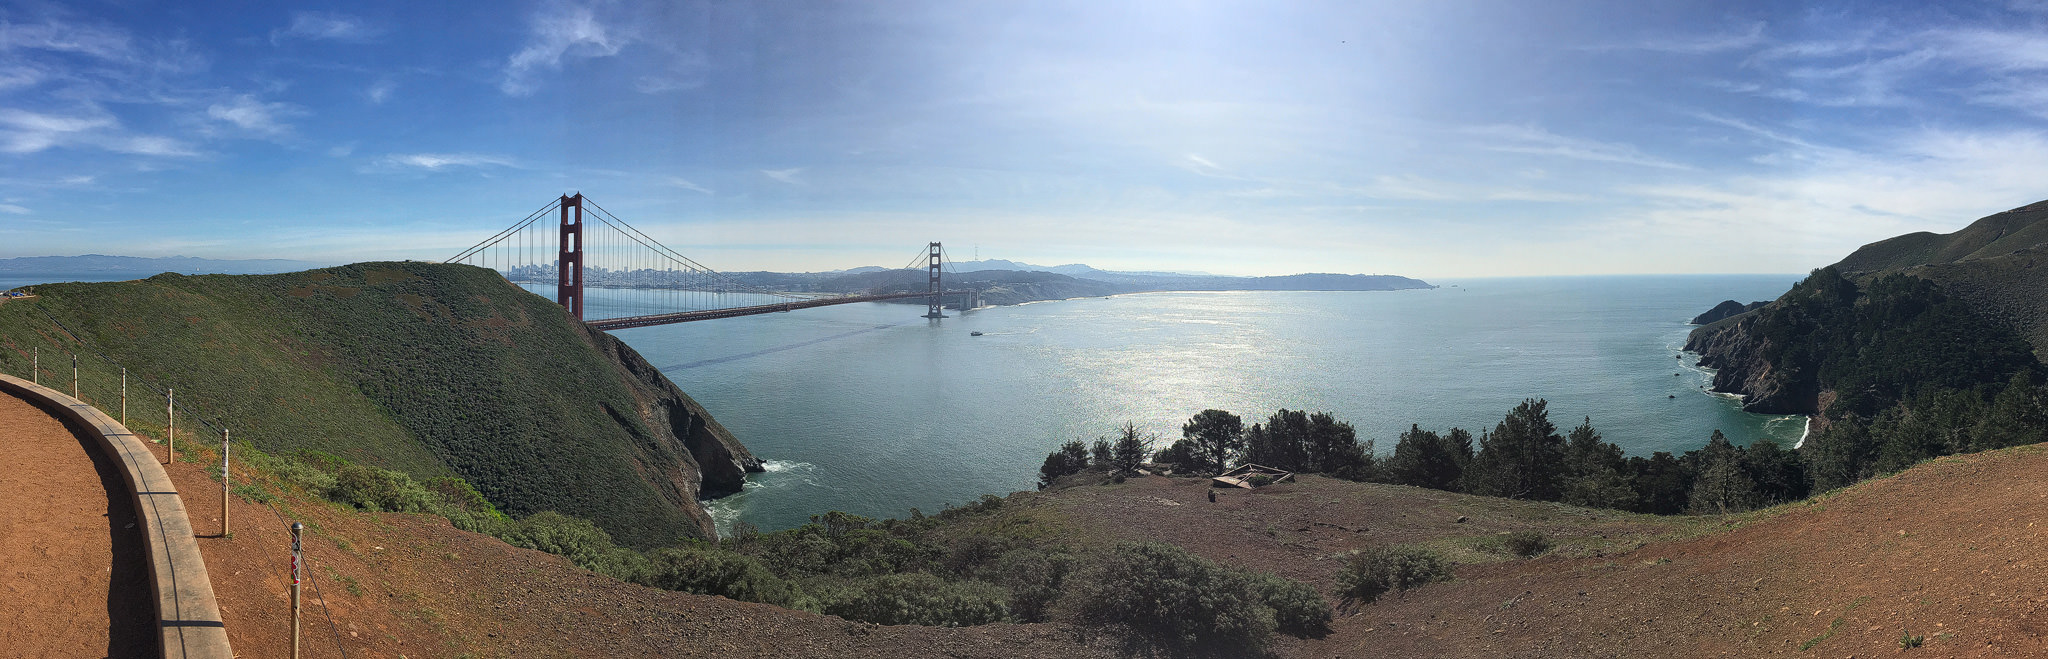 iPhone panoramic of the Golden Gate bridge